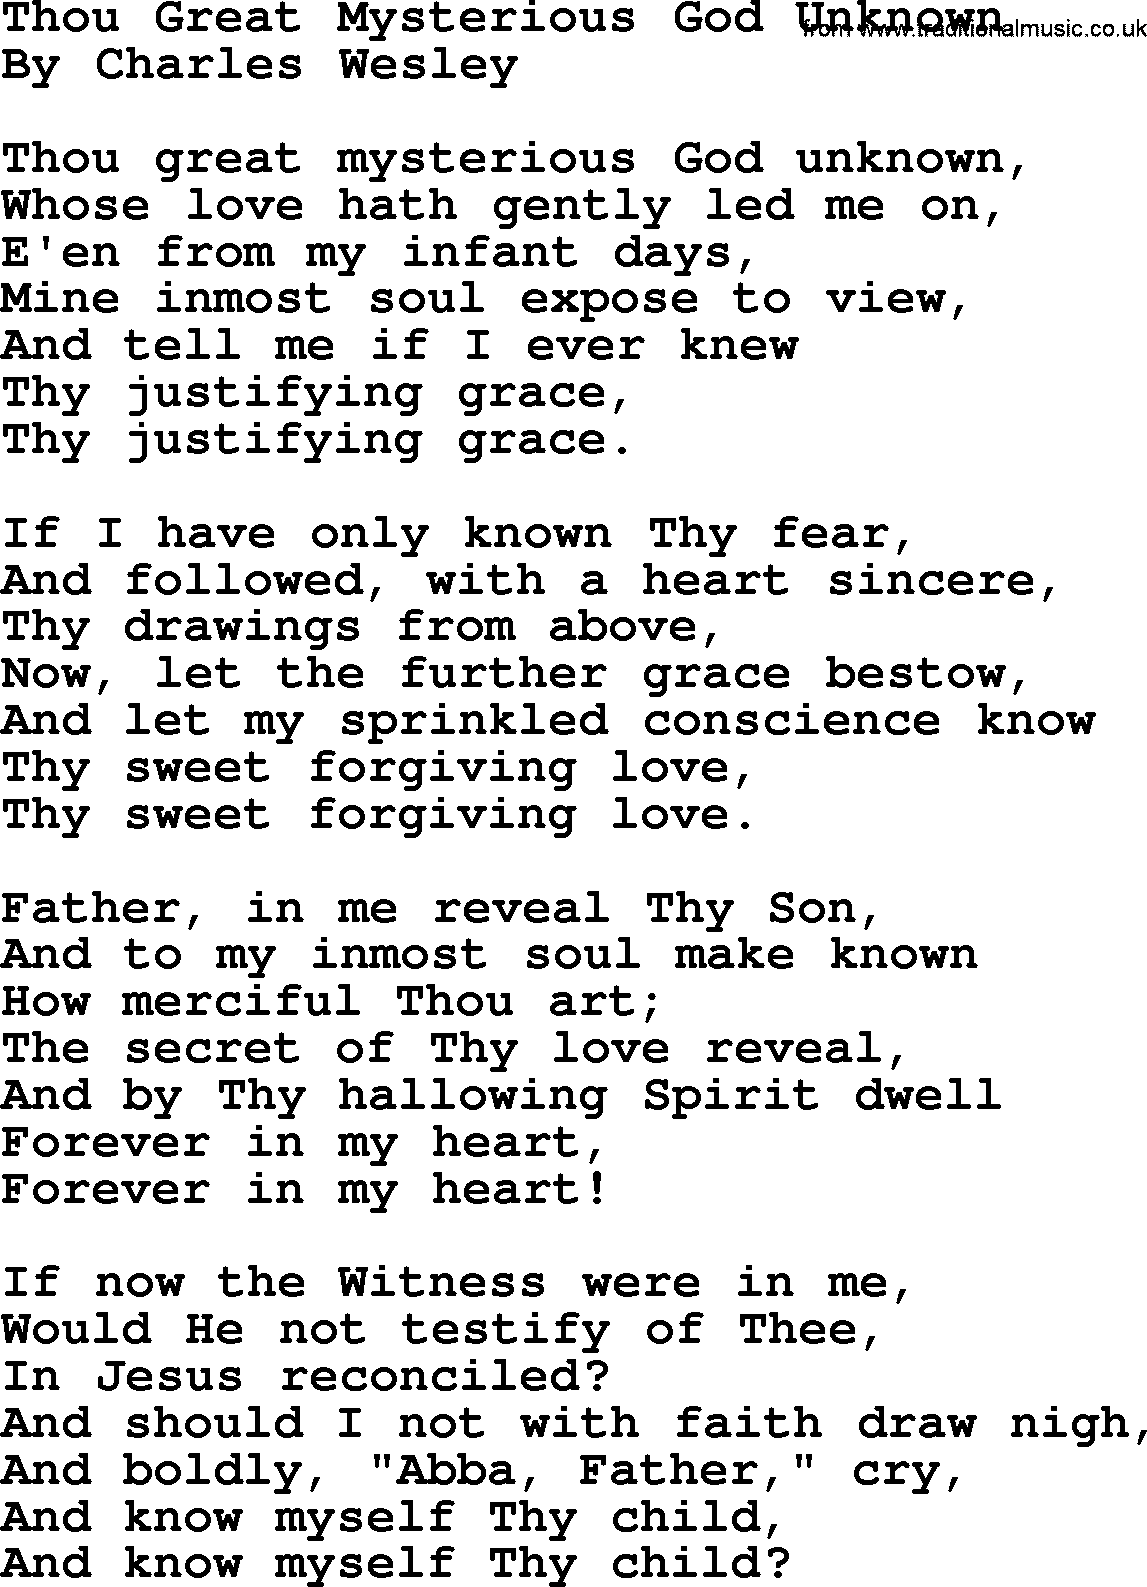 Charles Wesley hymn: Thou Great Mysterious God Unknown, lyrics